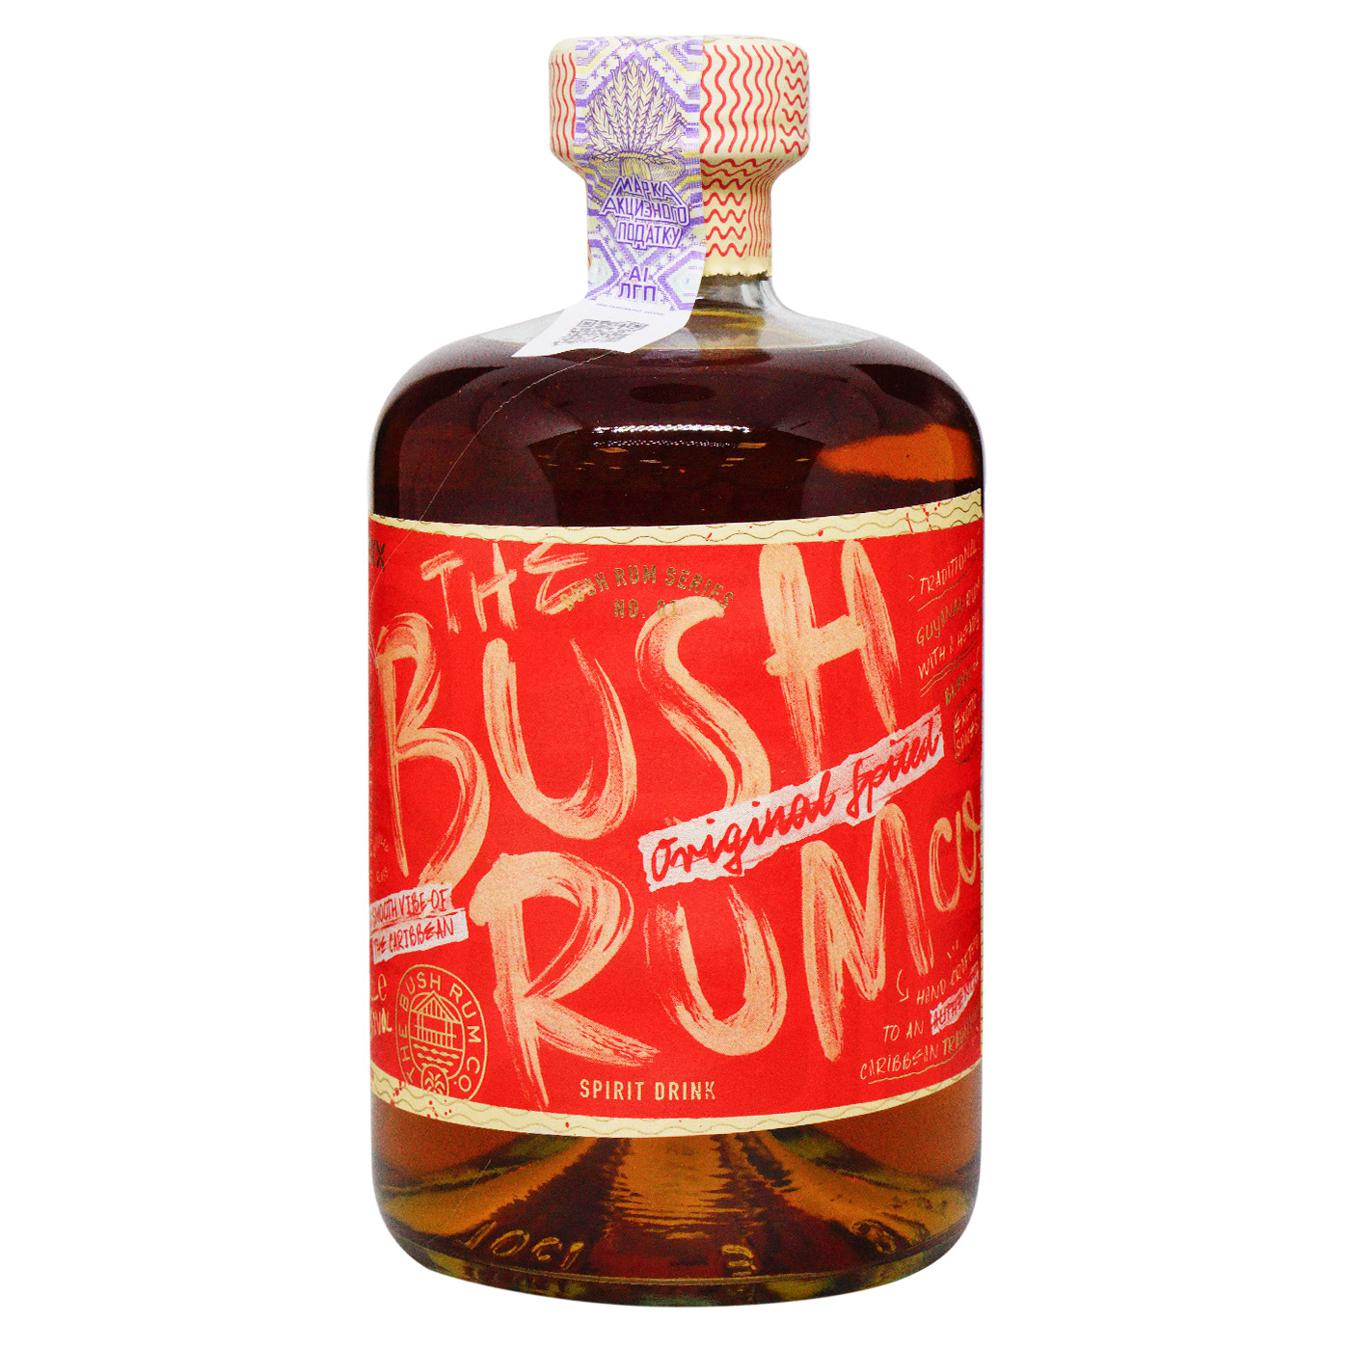 Rum-based drink Bush Original Spiced 37.5% 0.7 l